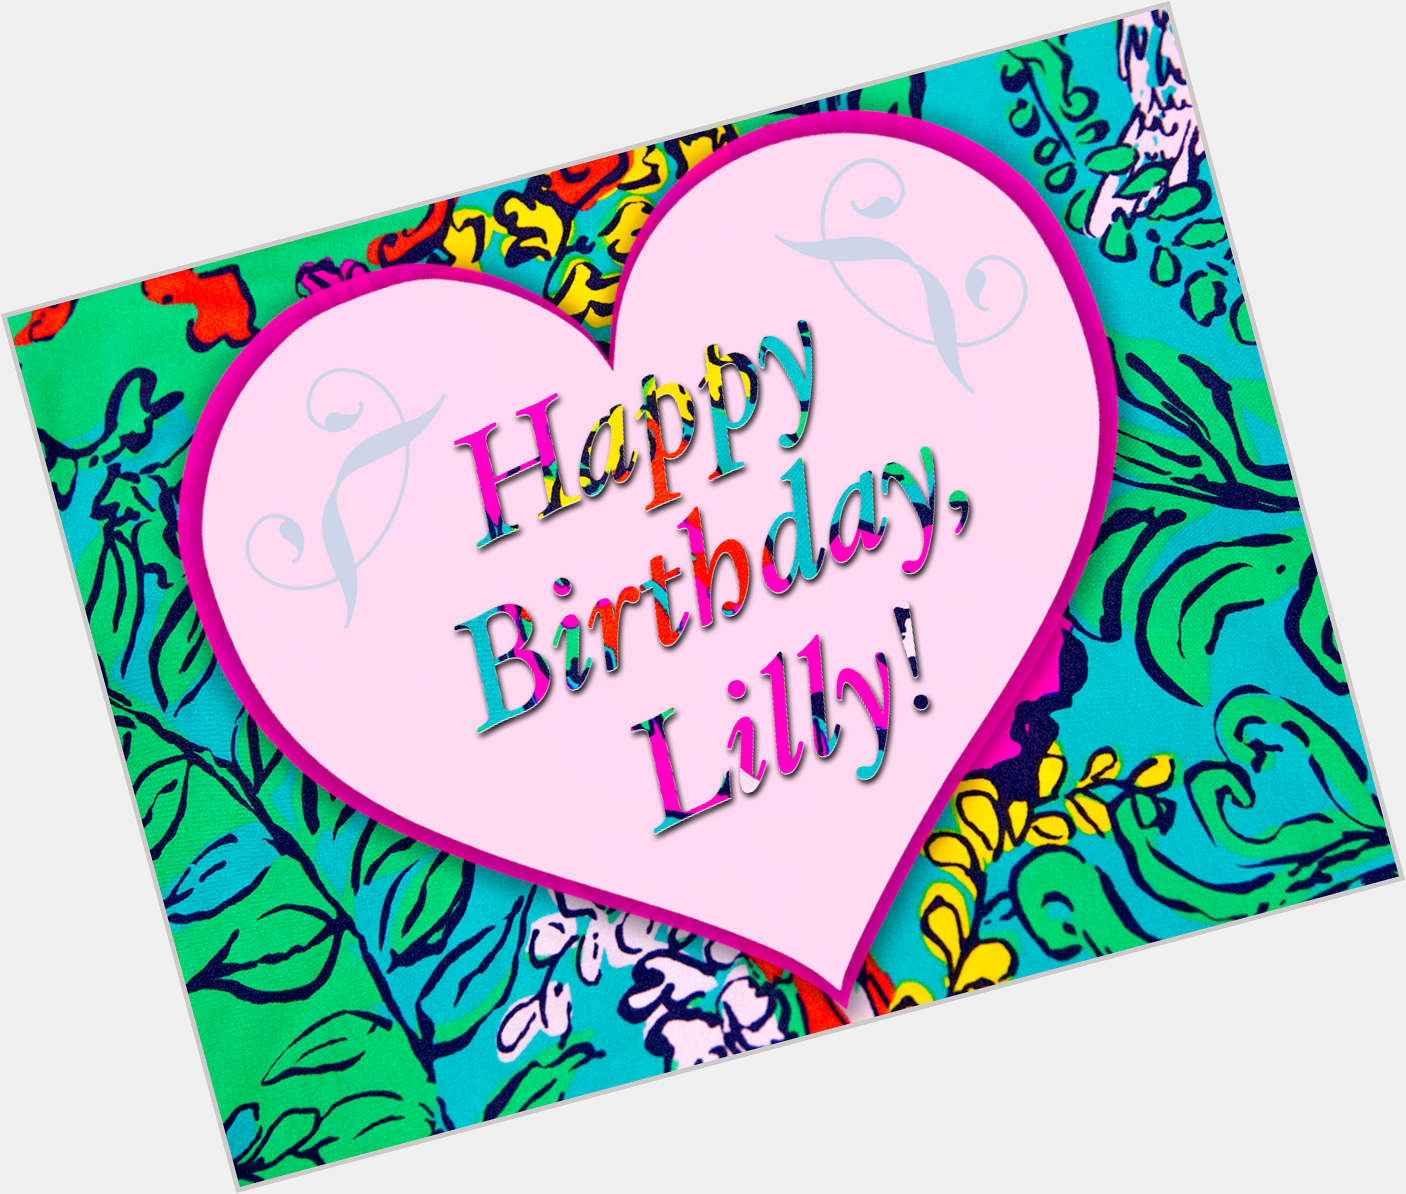 Happy Birthday, Lilly! We <3 you!  